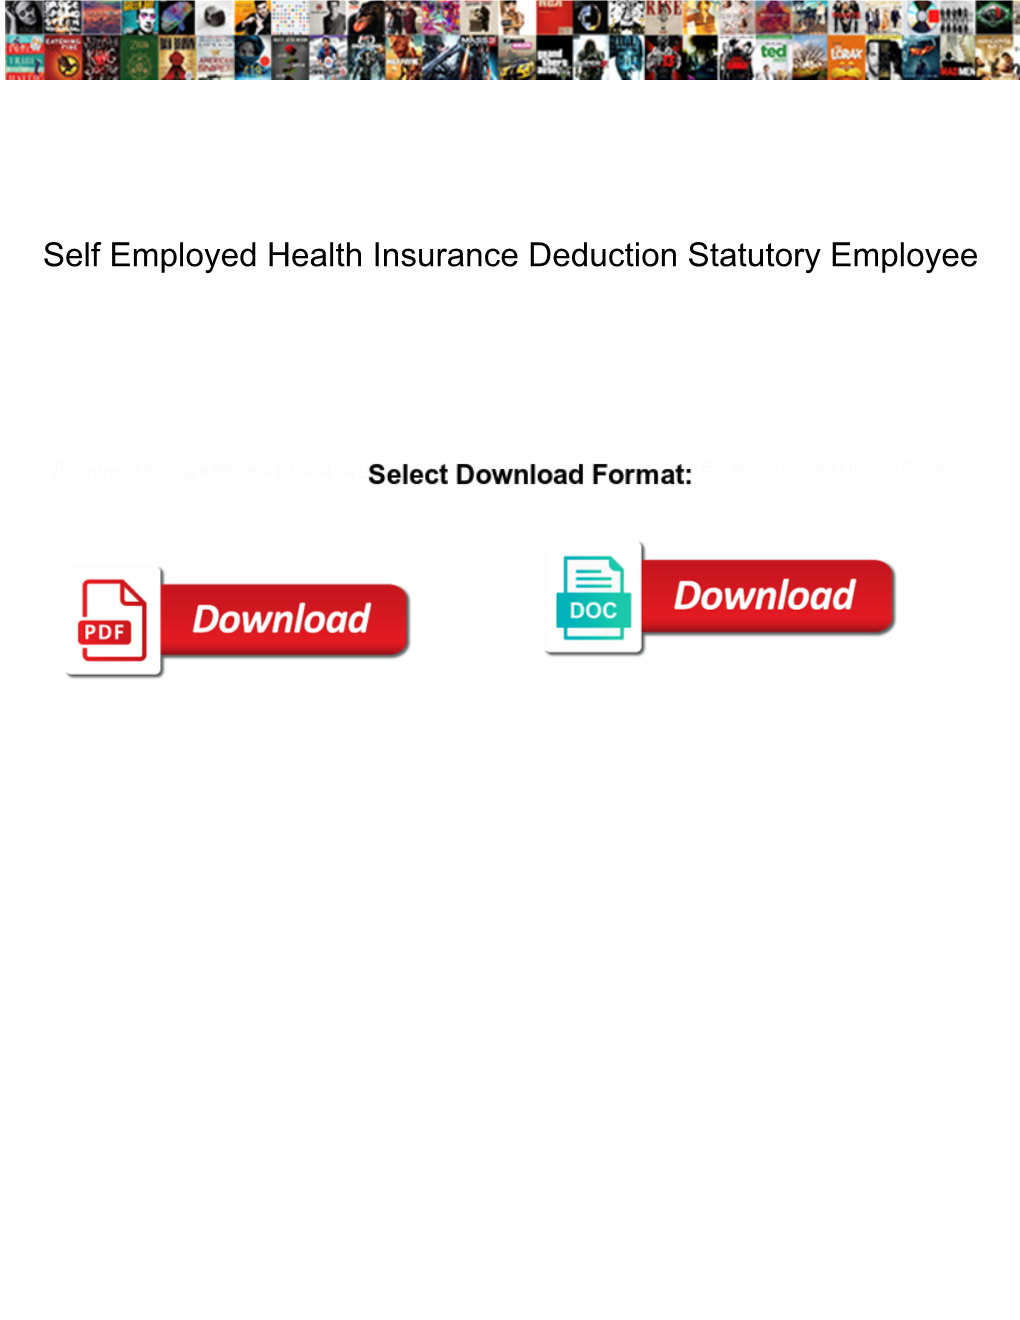 Self Employed Health Insurance Deduction Statutory Employee